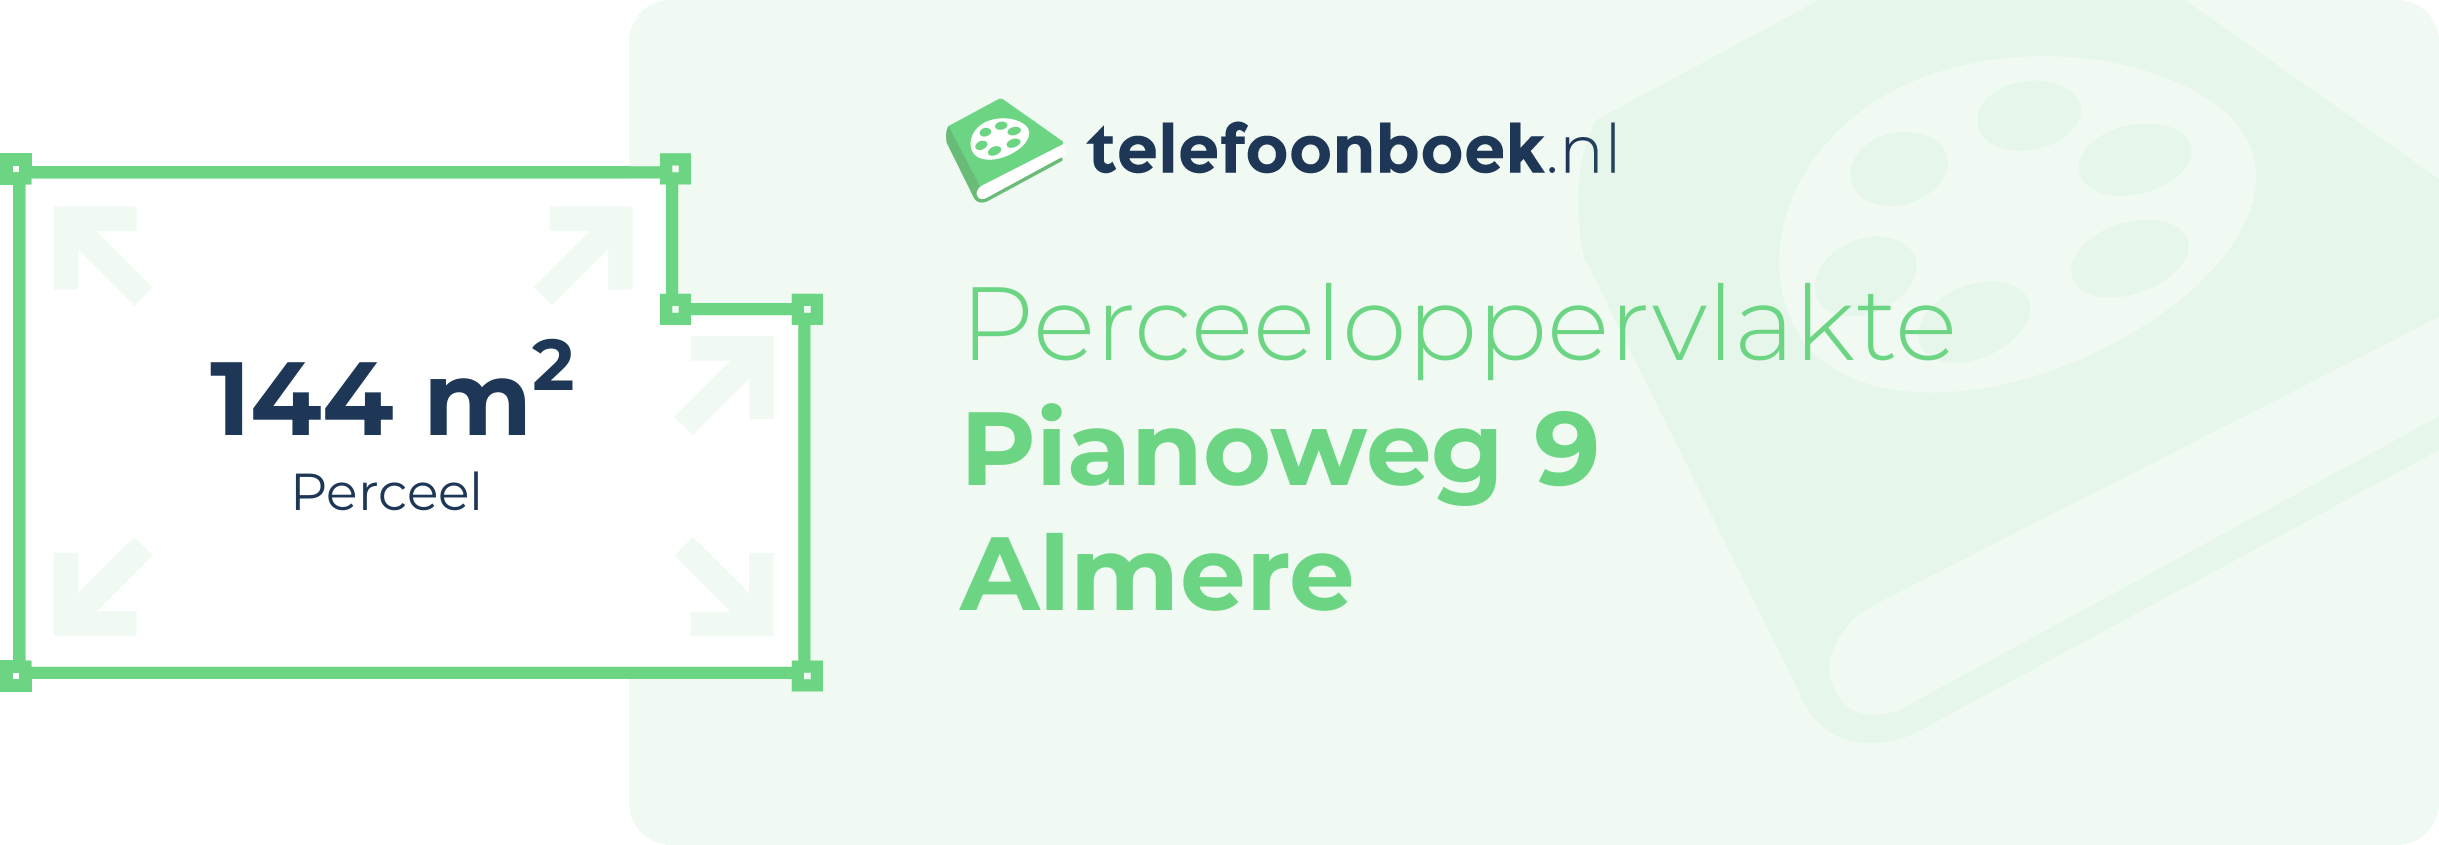 Perceeloppervlakte Pianoweg 9 Almere